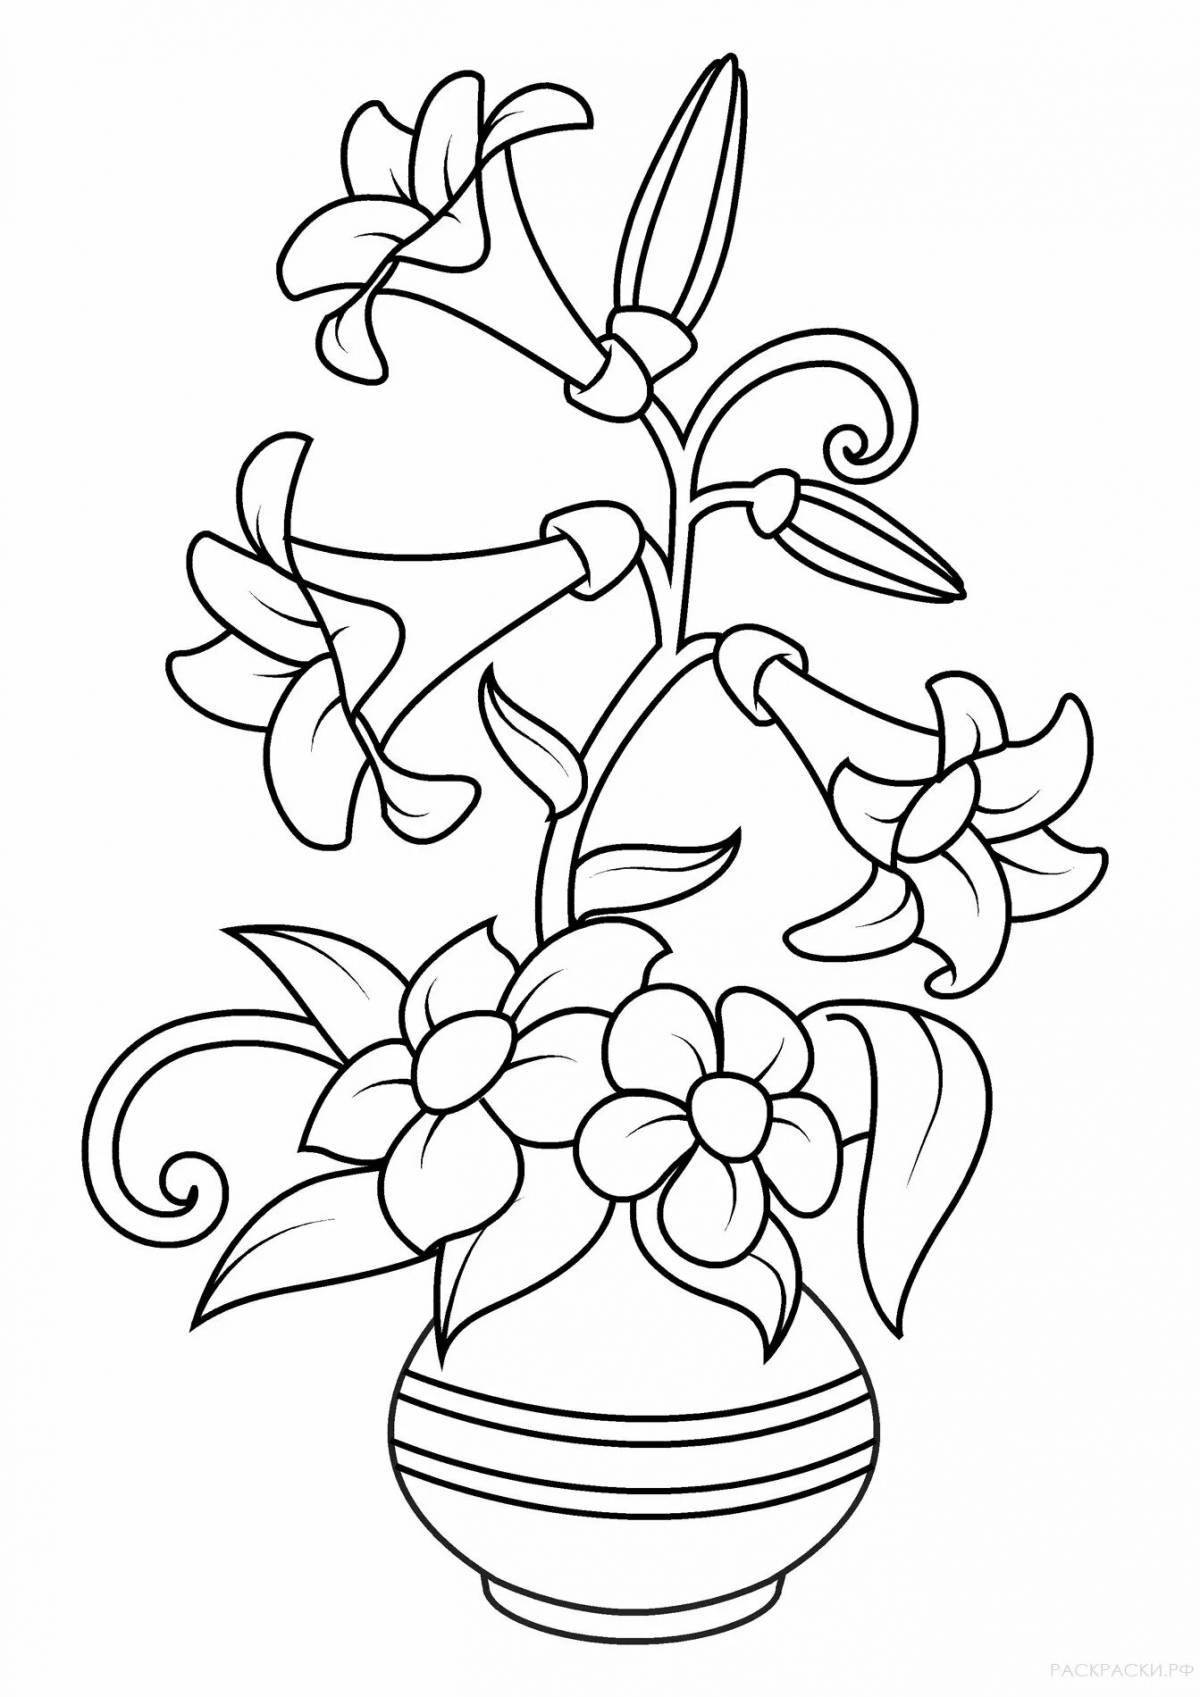 Coloring book elegant bouquet in a vase